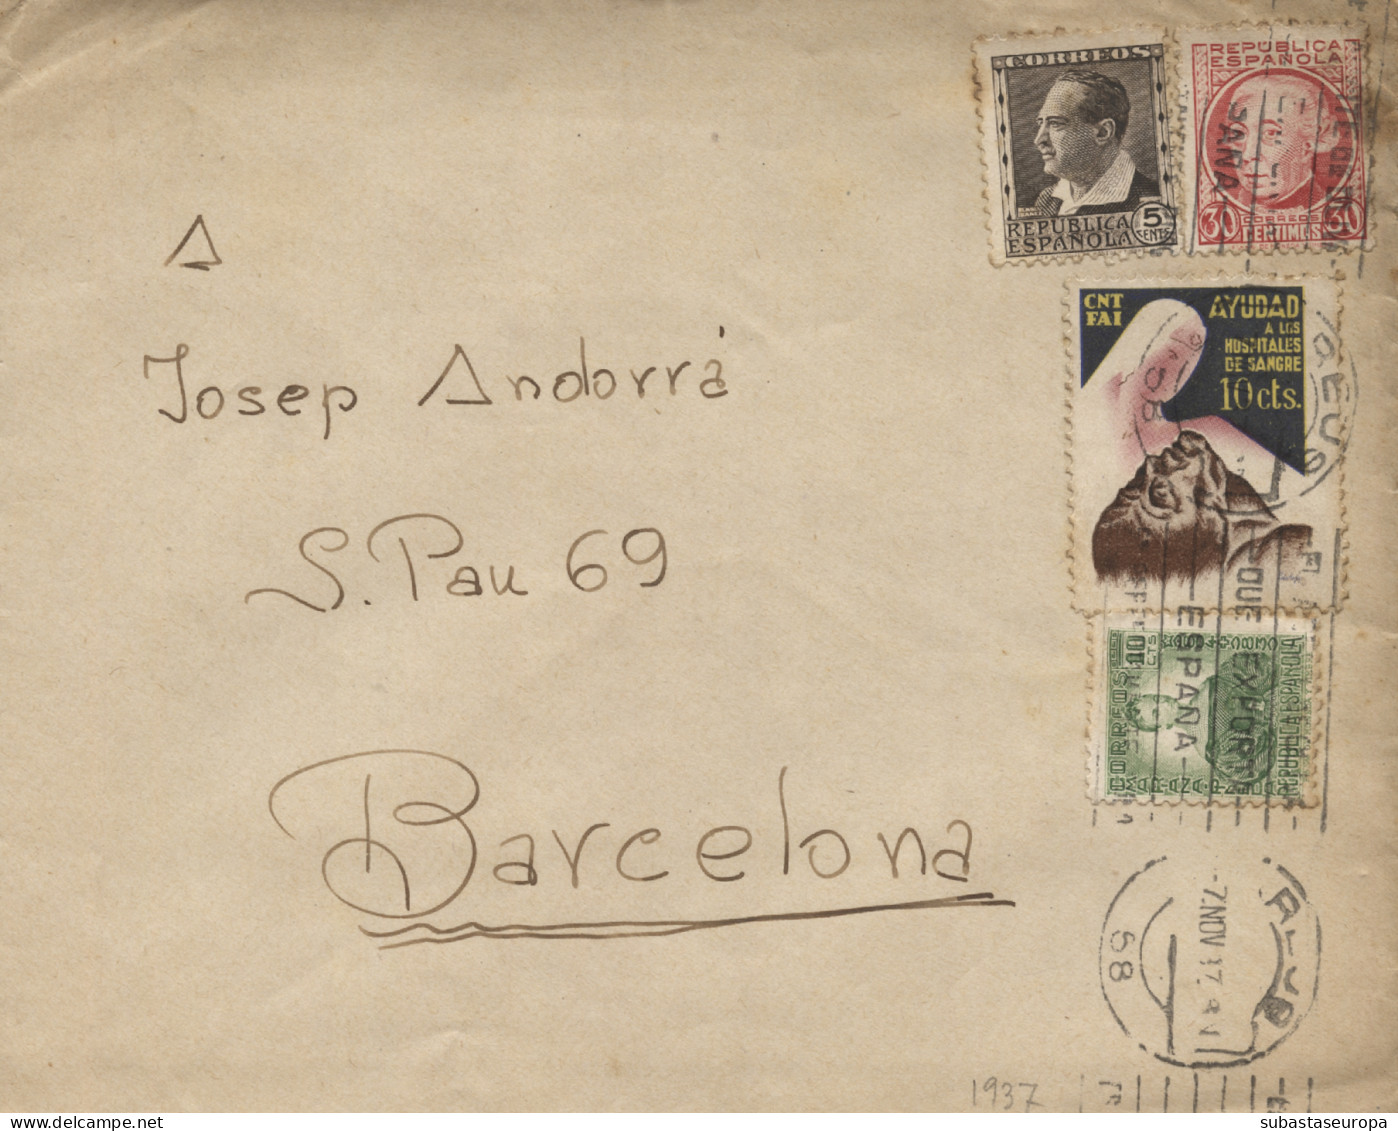 Carta Procedente Del Archivo "Andorrà", Con Franqueo De Viñeta Política. Circulada De Reus A Barcelona, El 7/11/37. - Marques De Censures Républicaines